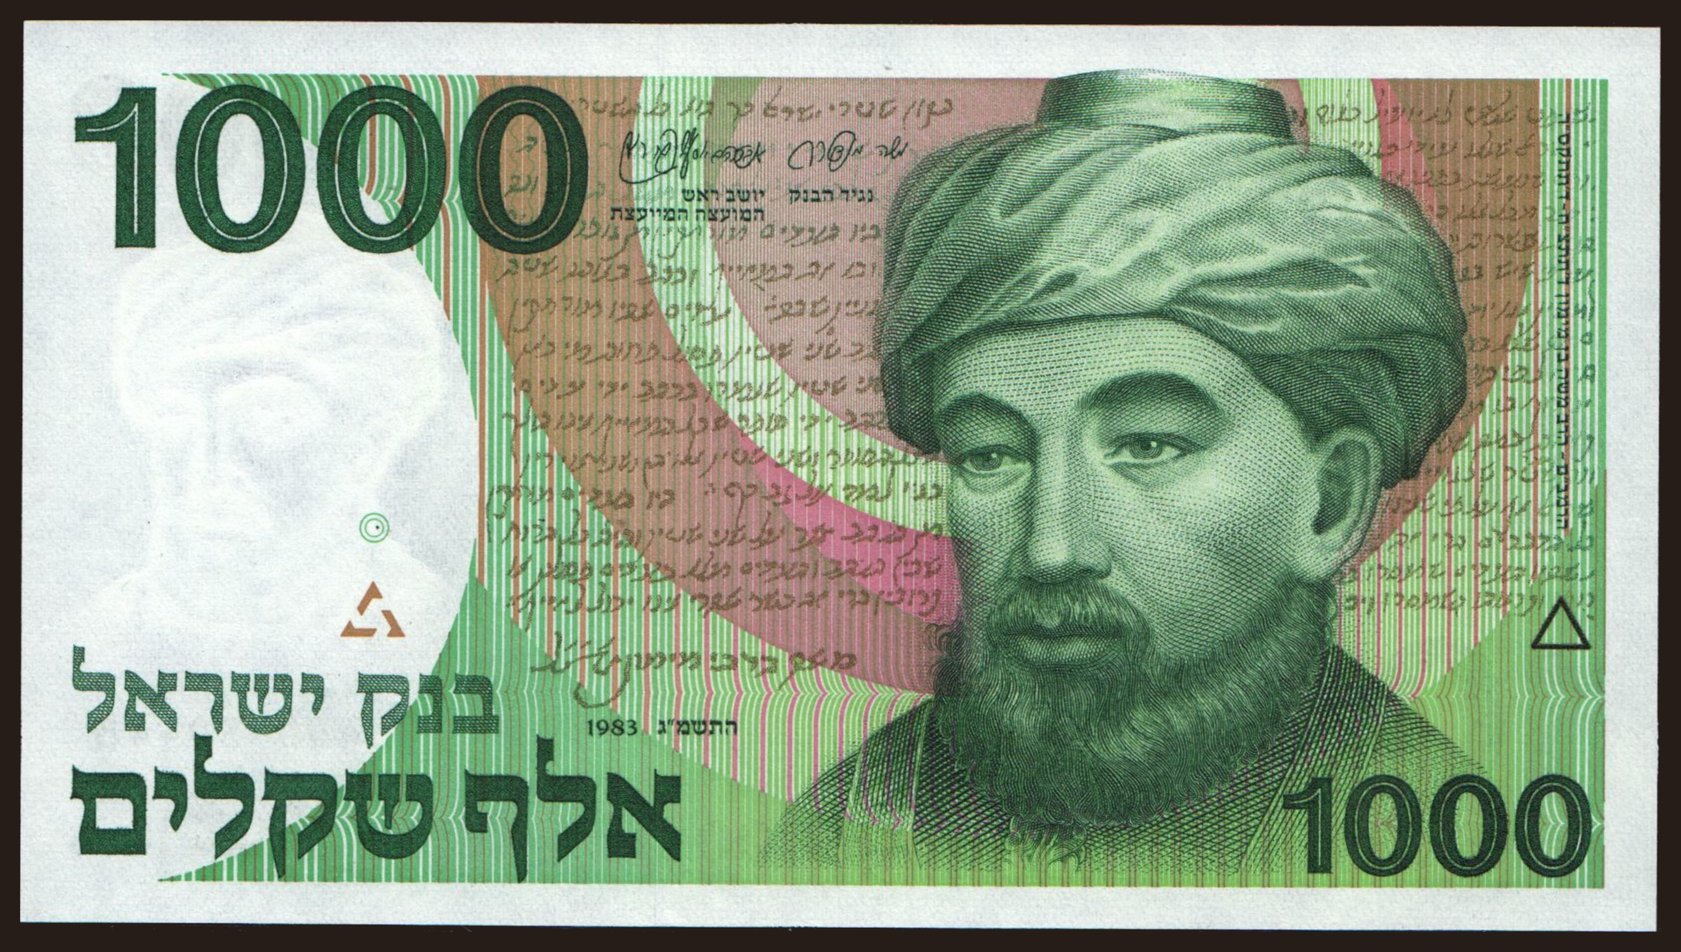 1000 sheqalim, 1983